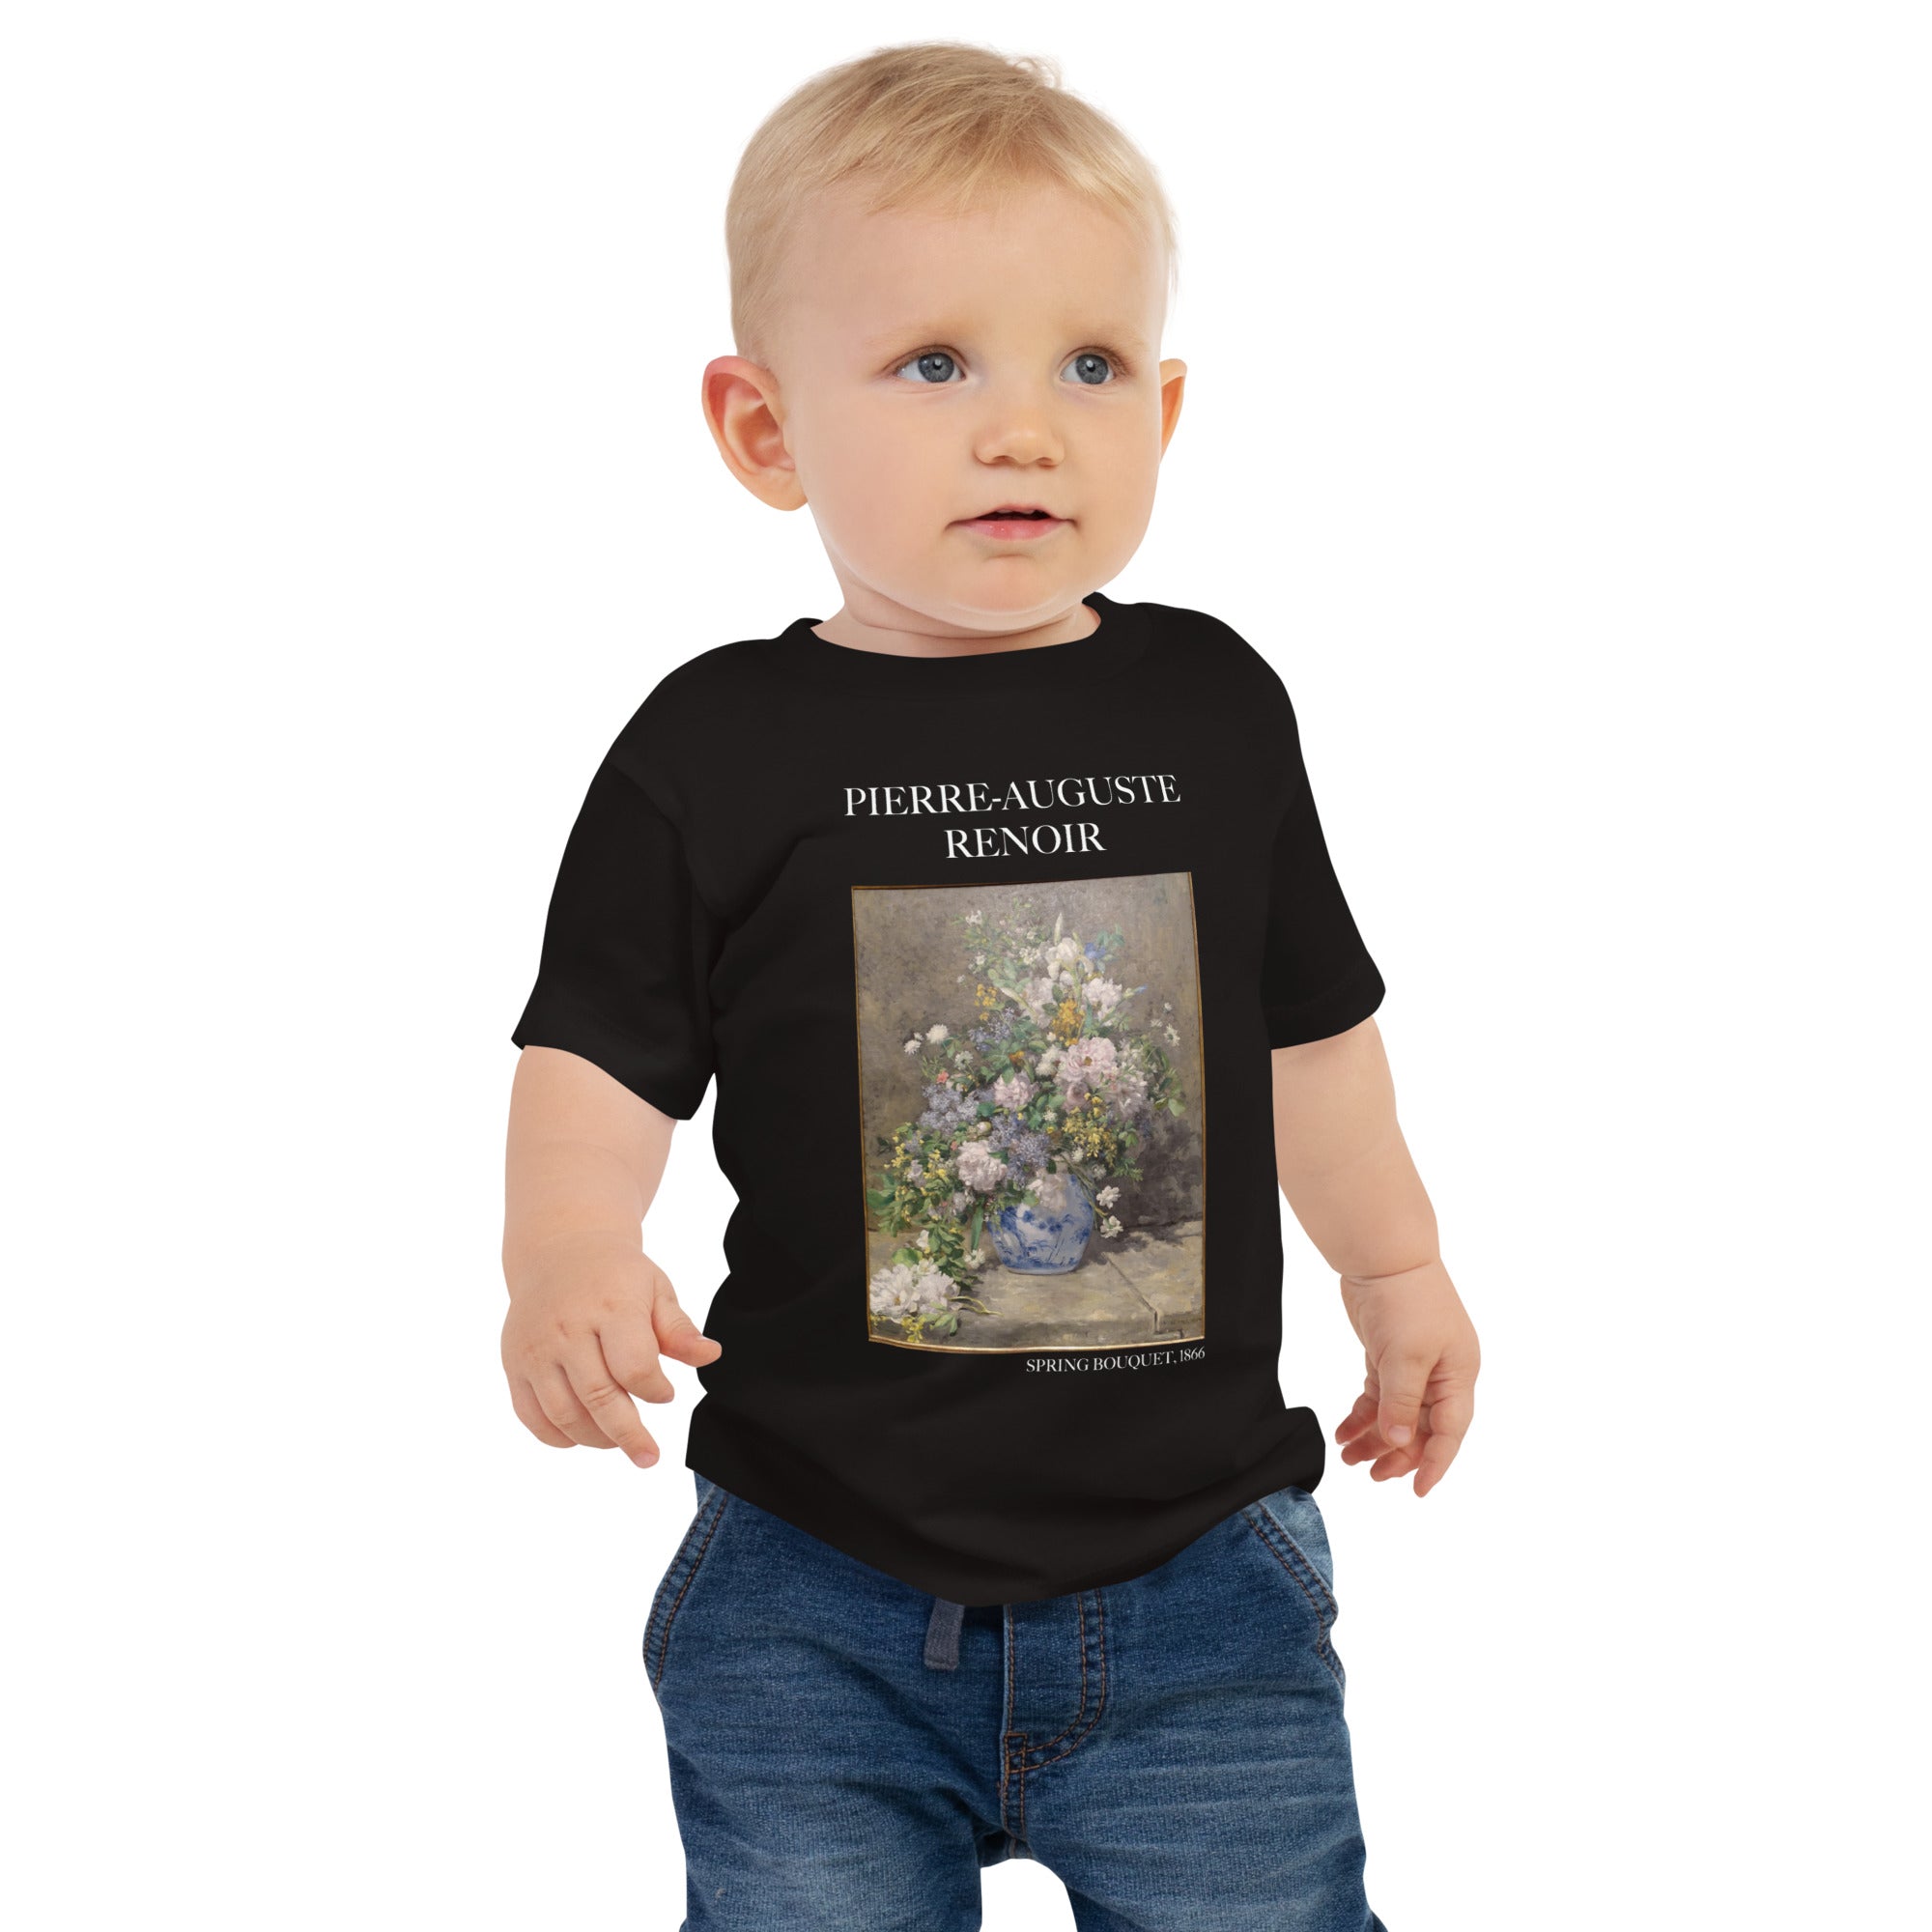 Pierre-Auguste Renoir 'Spring Bouquet' Famous Painting Baby Staple T-Shirt | Premium Baby Art Tee